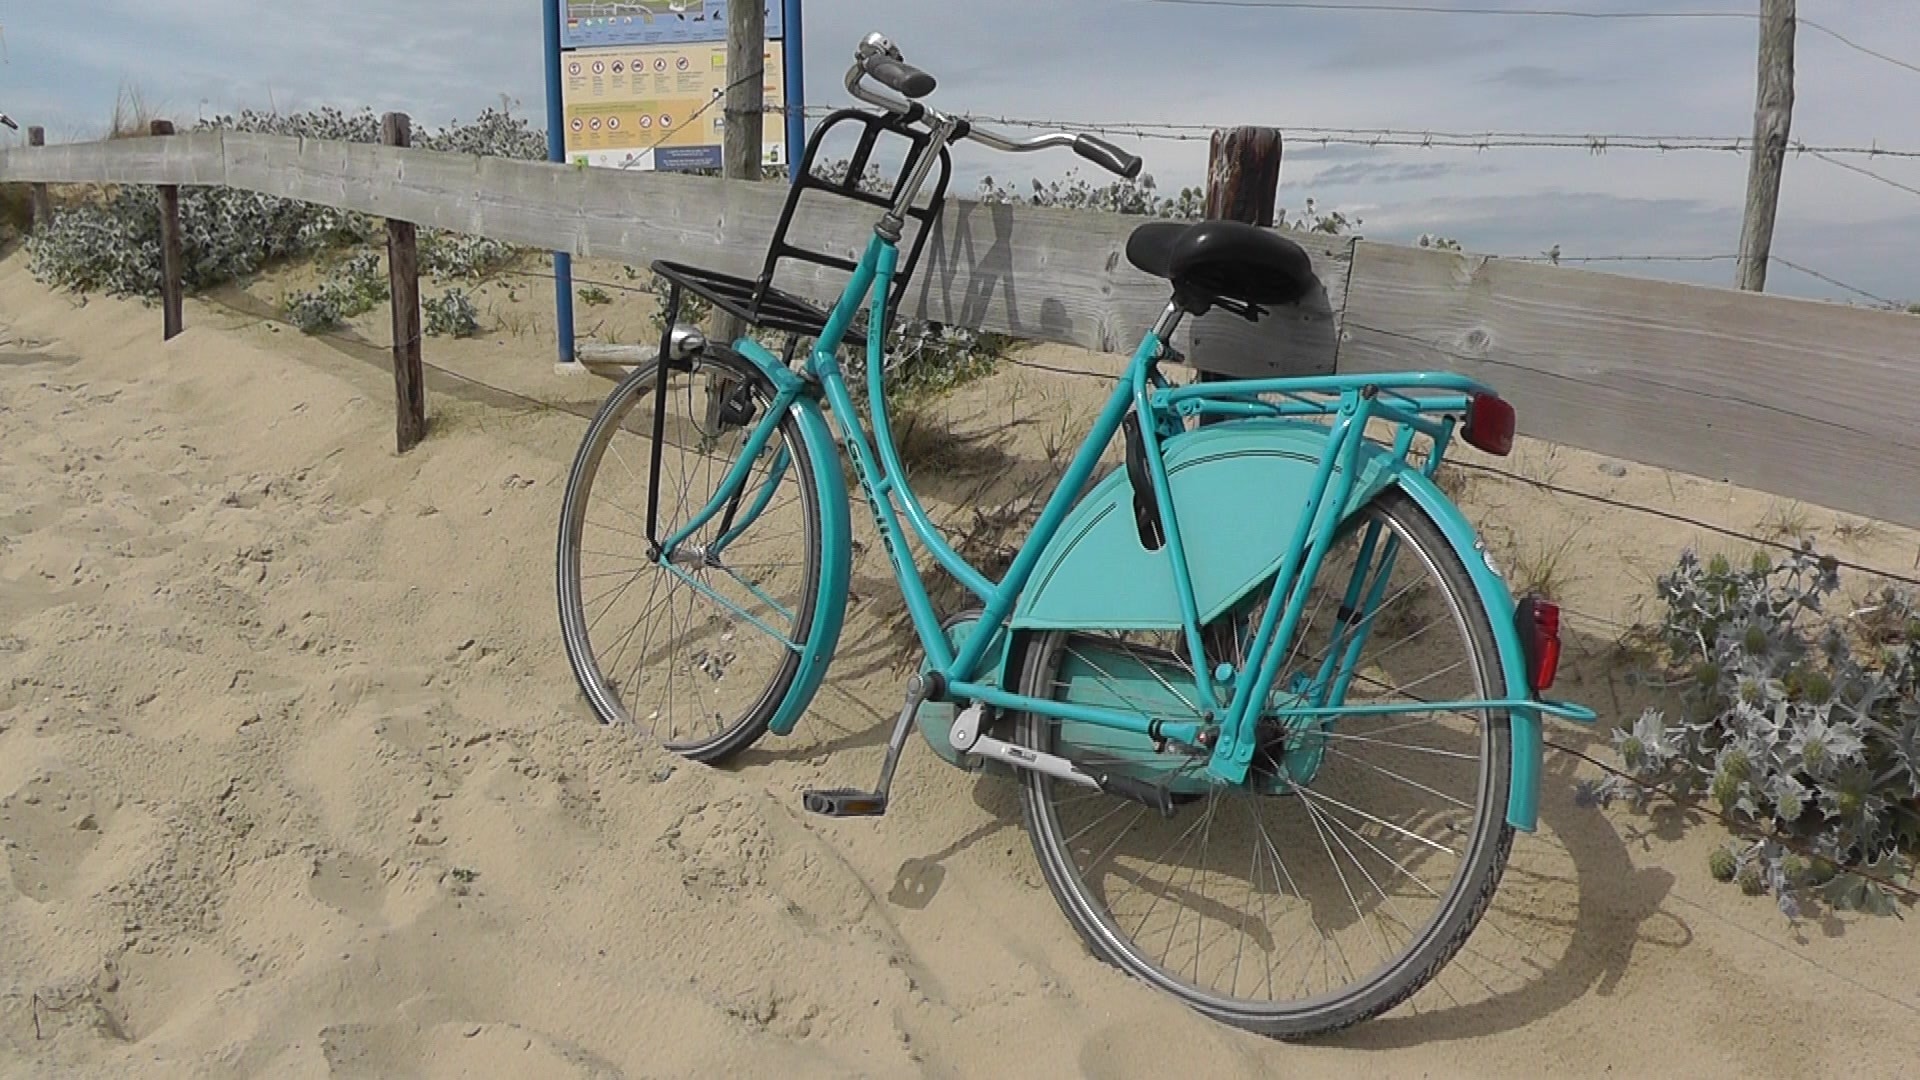 teal beach cruiser bicycle on sand